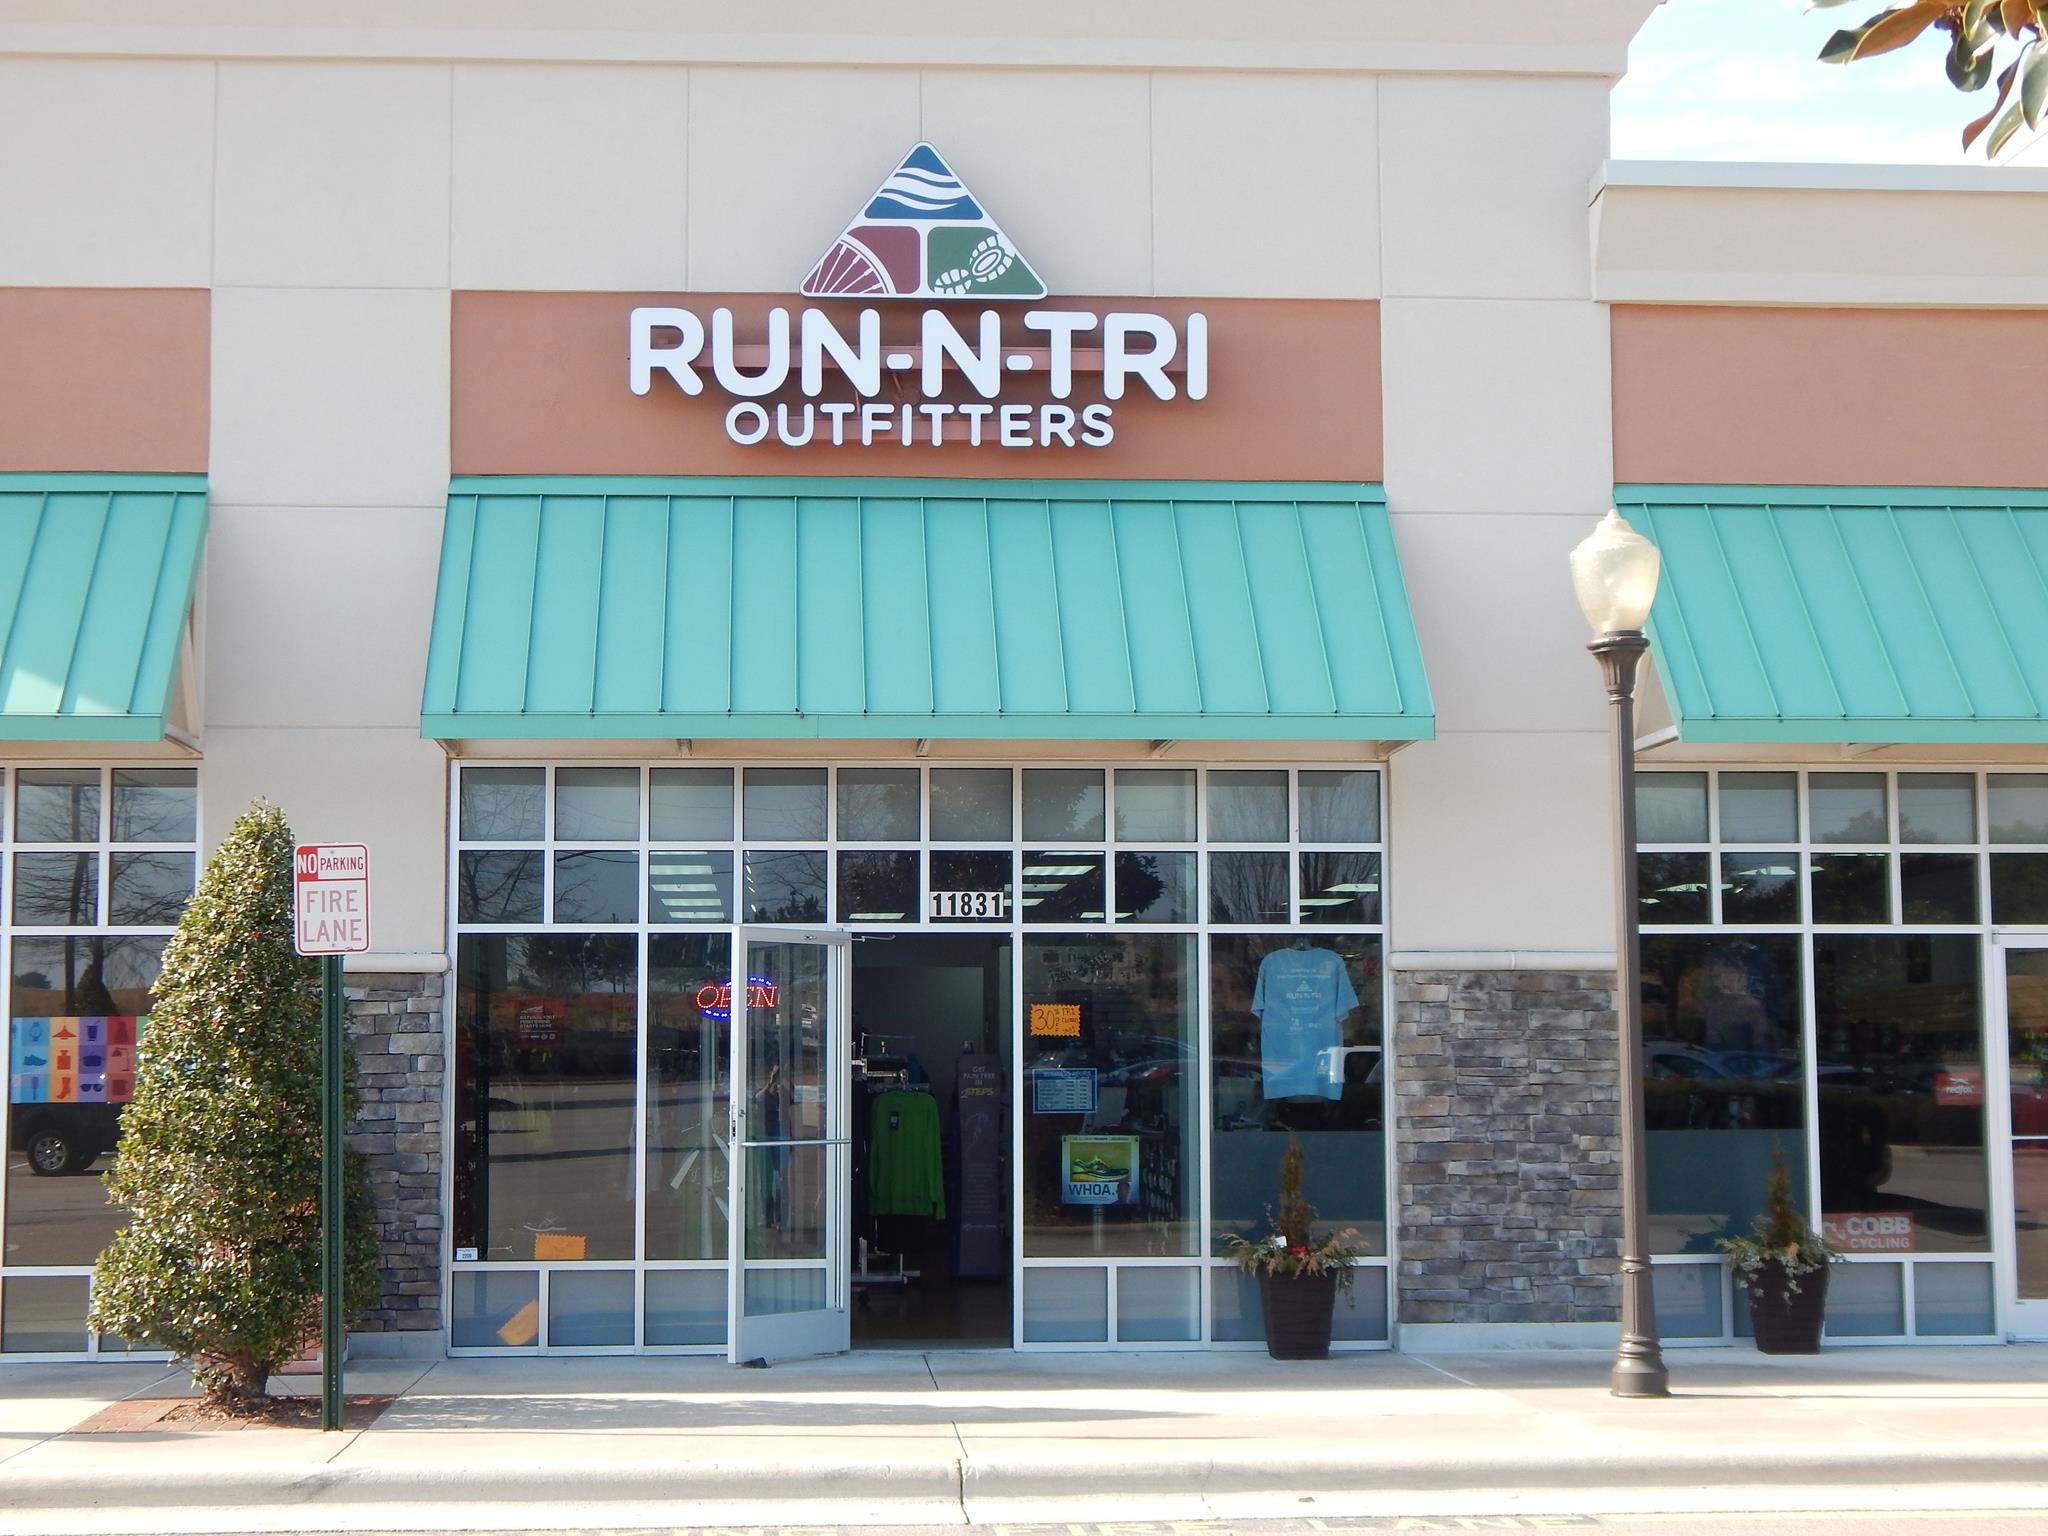 Exterior Sign for Run-N-Tri